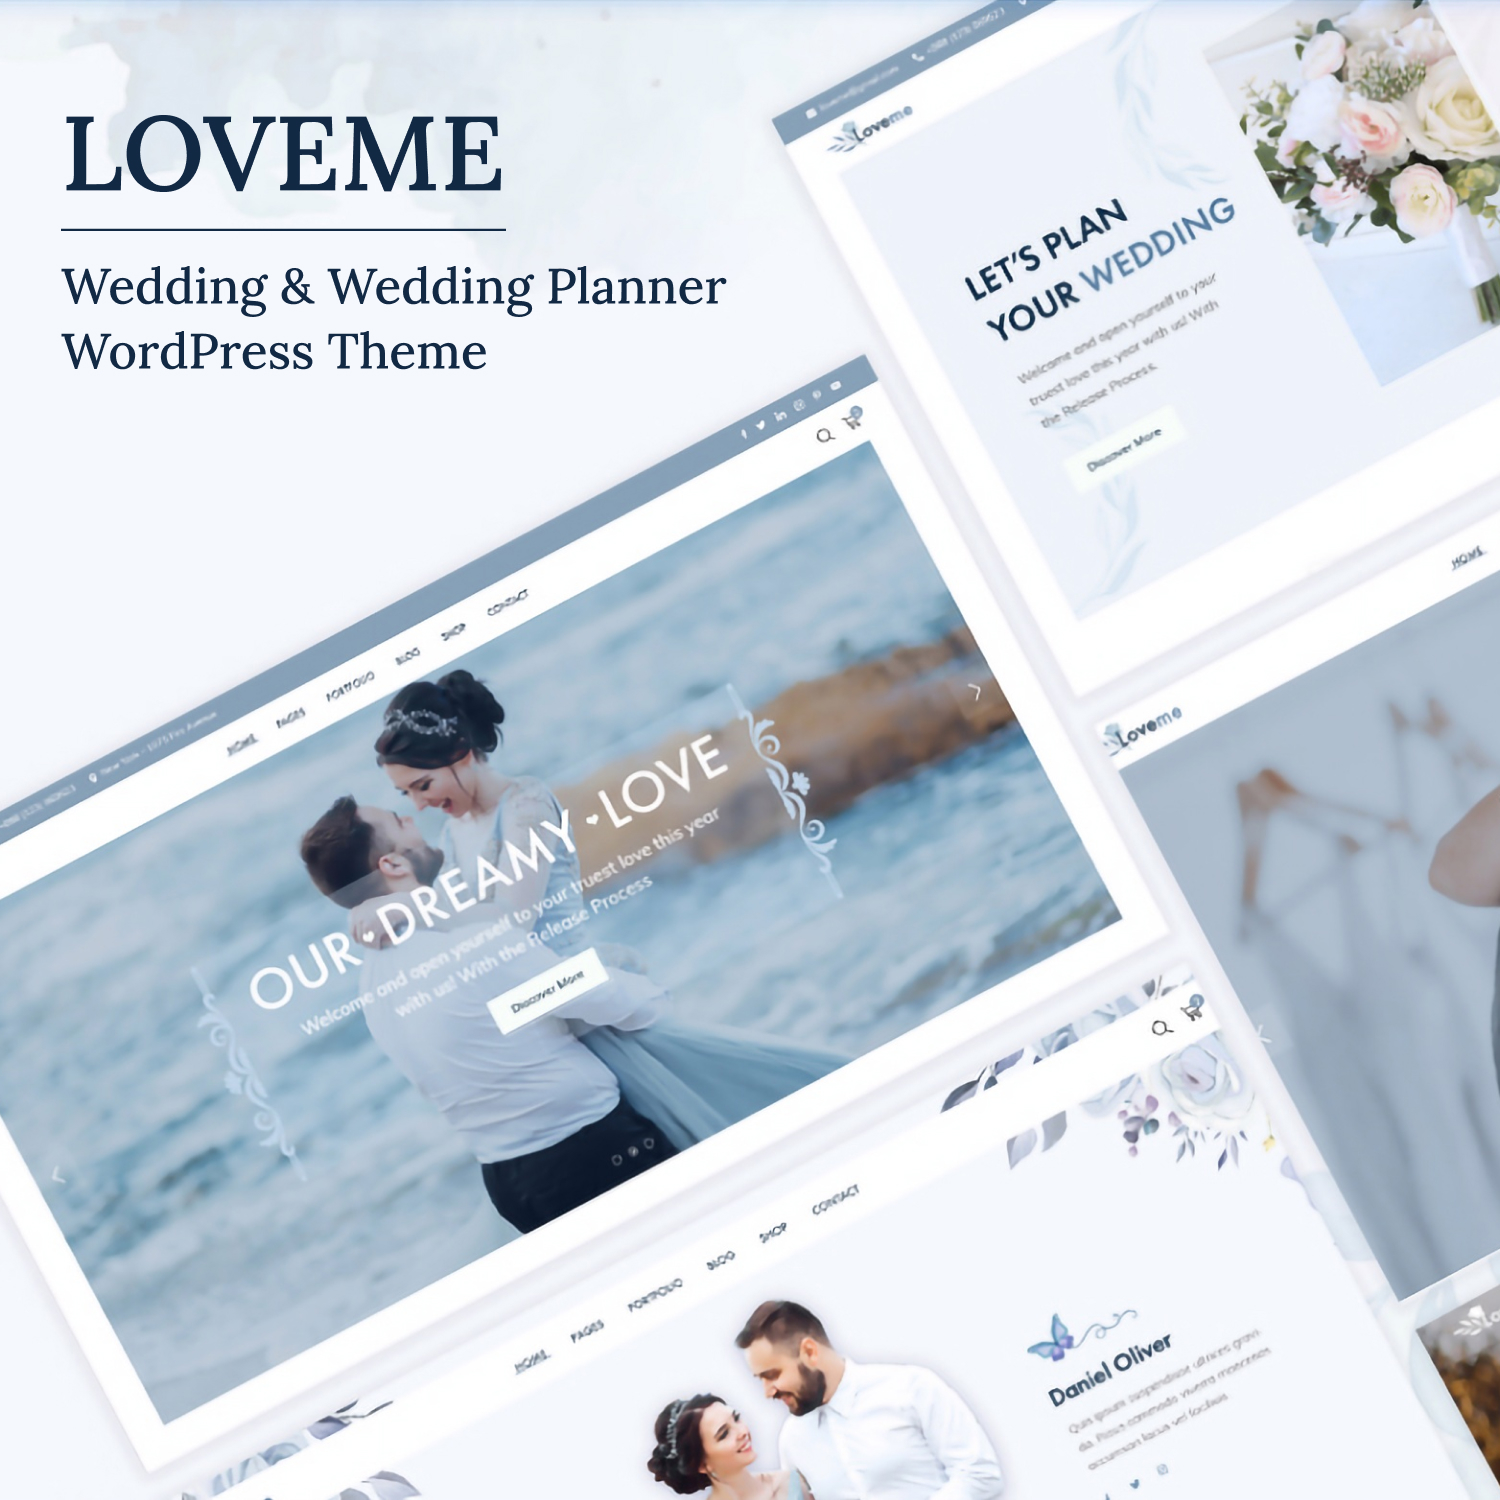 Preview loveme wedding wedding planner wordpress theme.